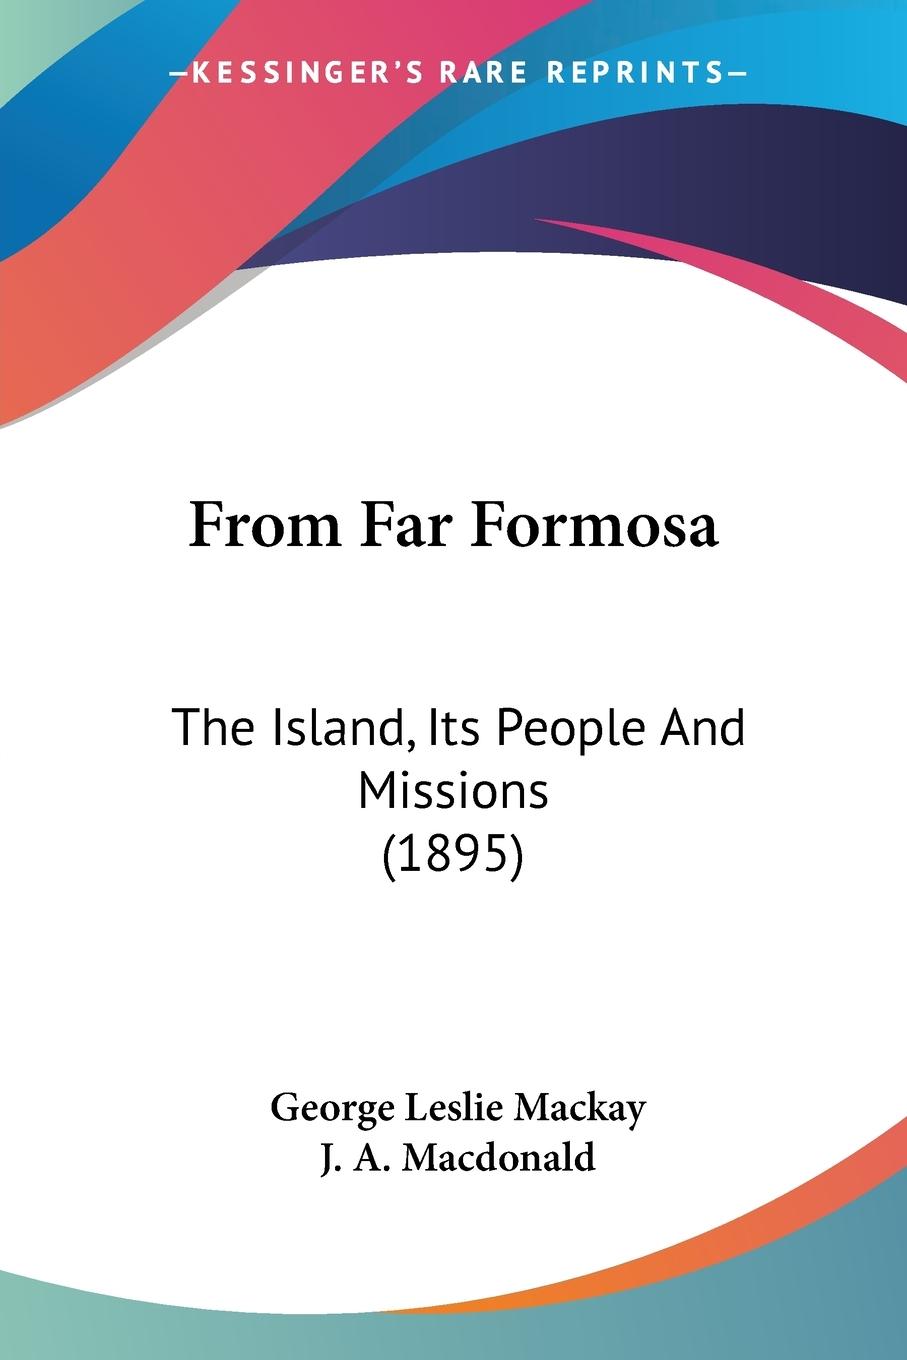 From Far Formosa - Mackay, George Leslie